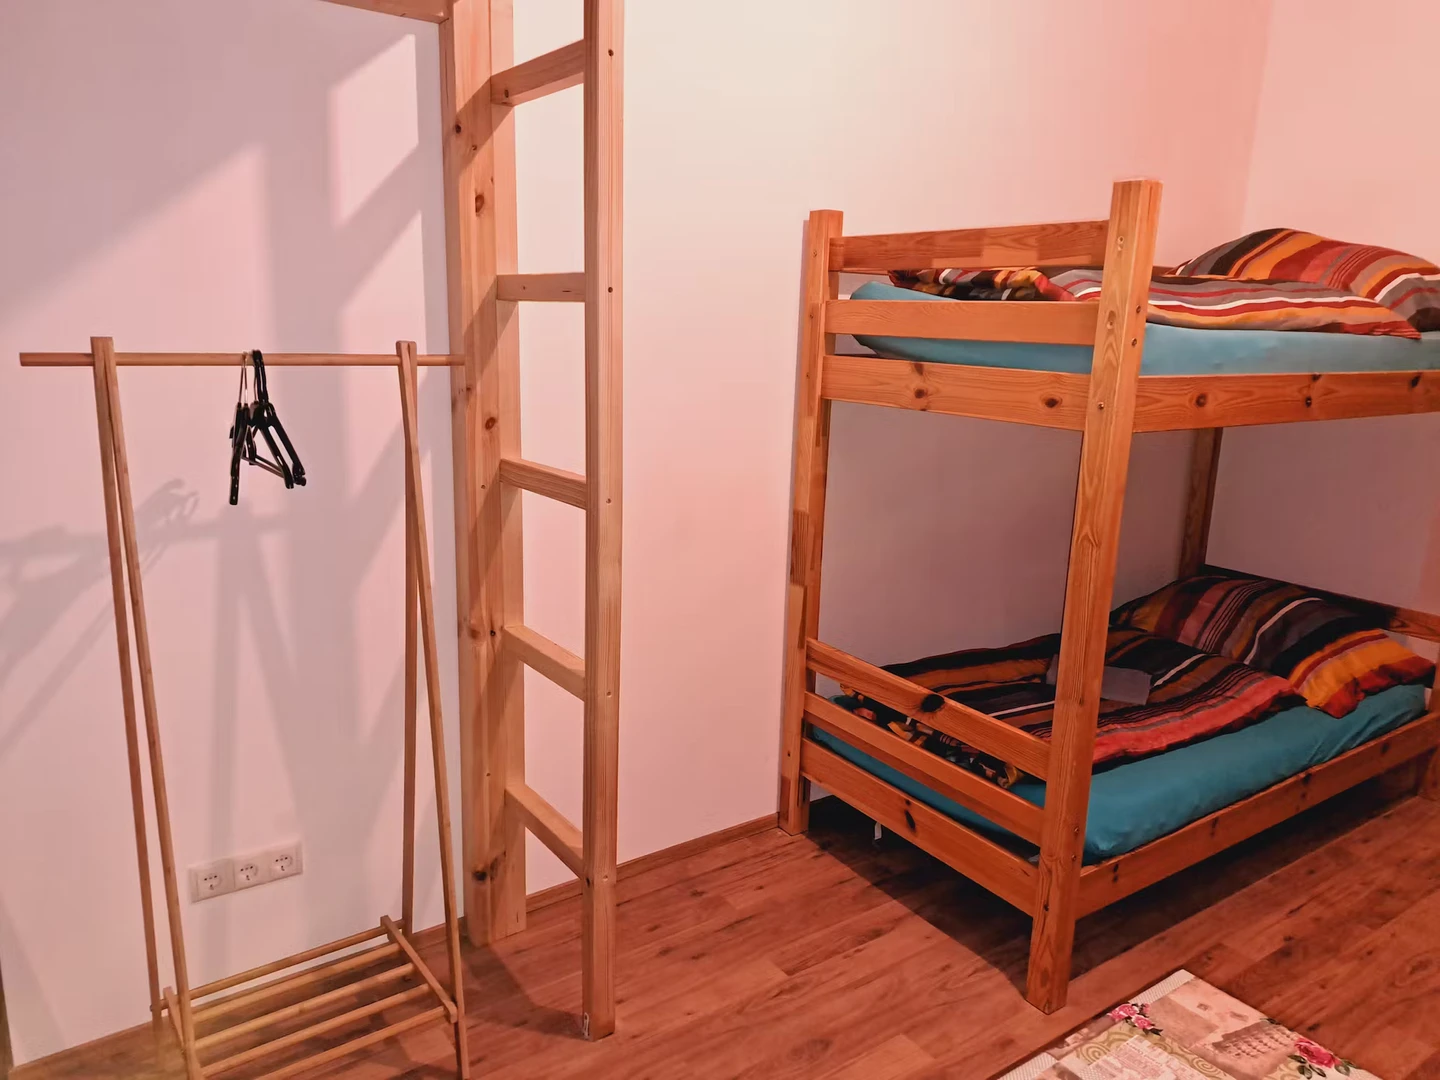 Shared room in 3-bedroom flat Vienna